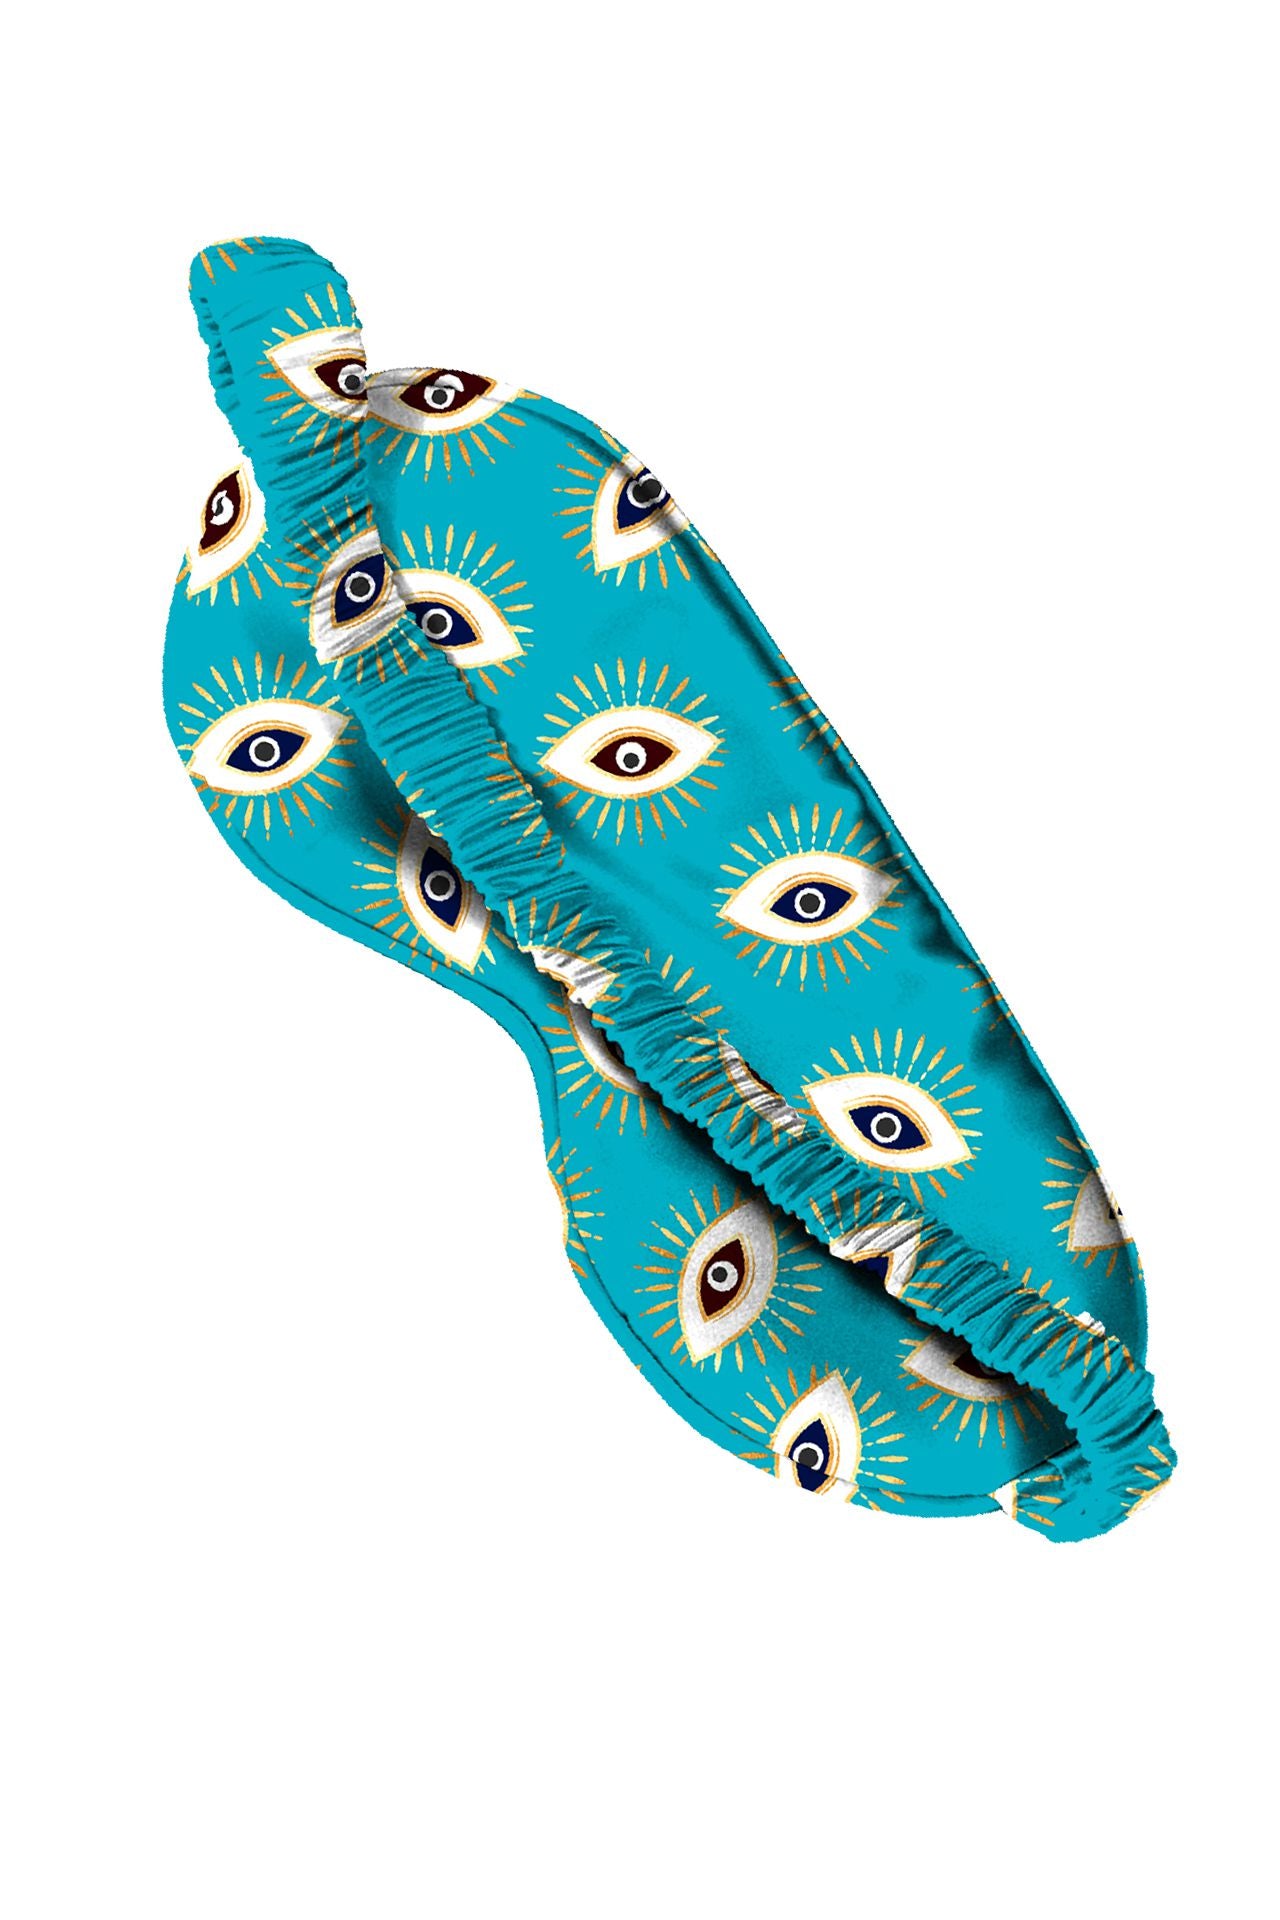 "Kyle X Shahida" "best silk sleep mask" "eye cover for sleep" "best sleep mask for women"